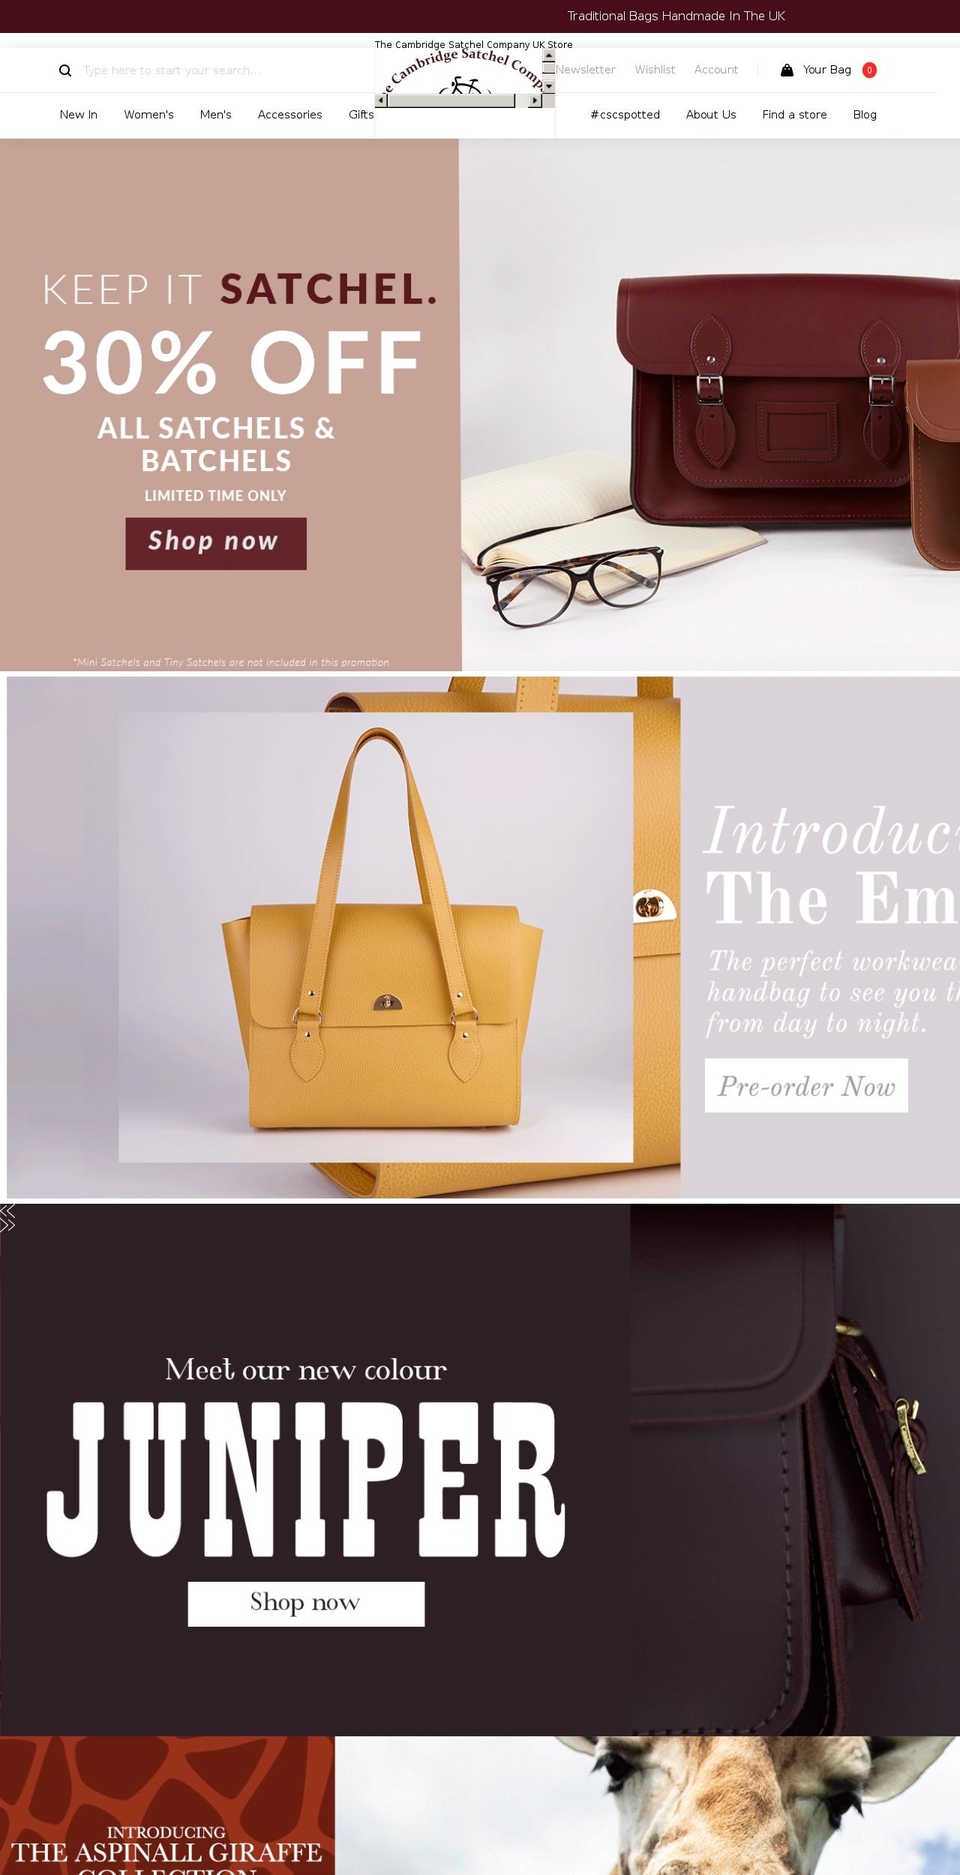 the-cambridge-satchels-company.biz shopify website screenshot